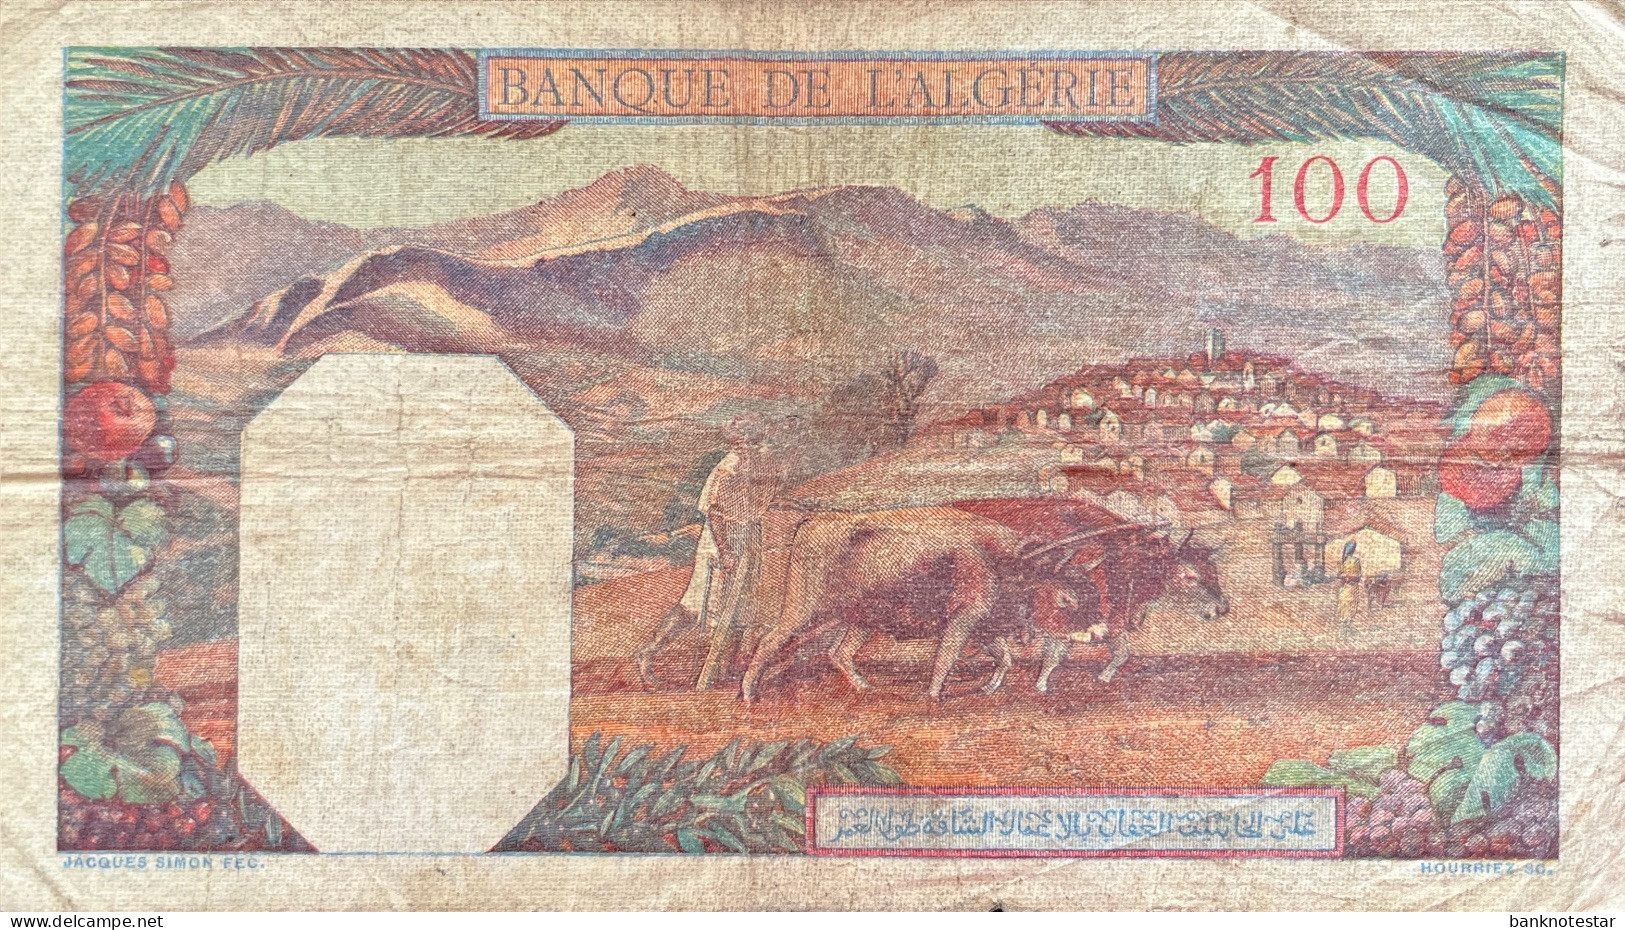 Algeria 100 Francs, P-85 (1940) - Very Good - Algerien